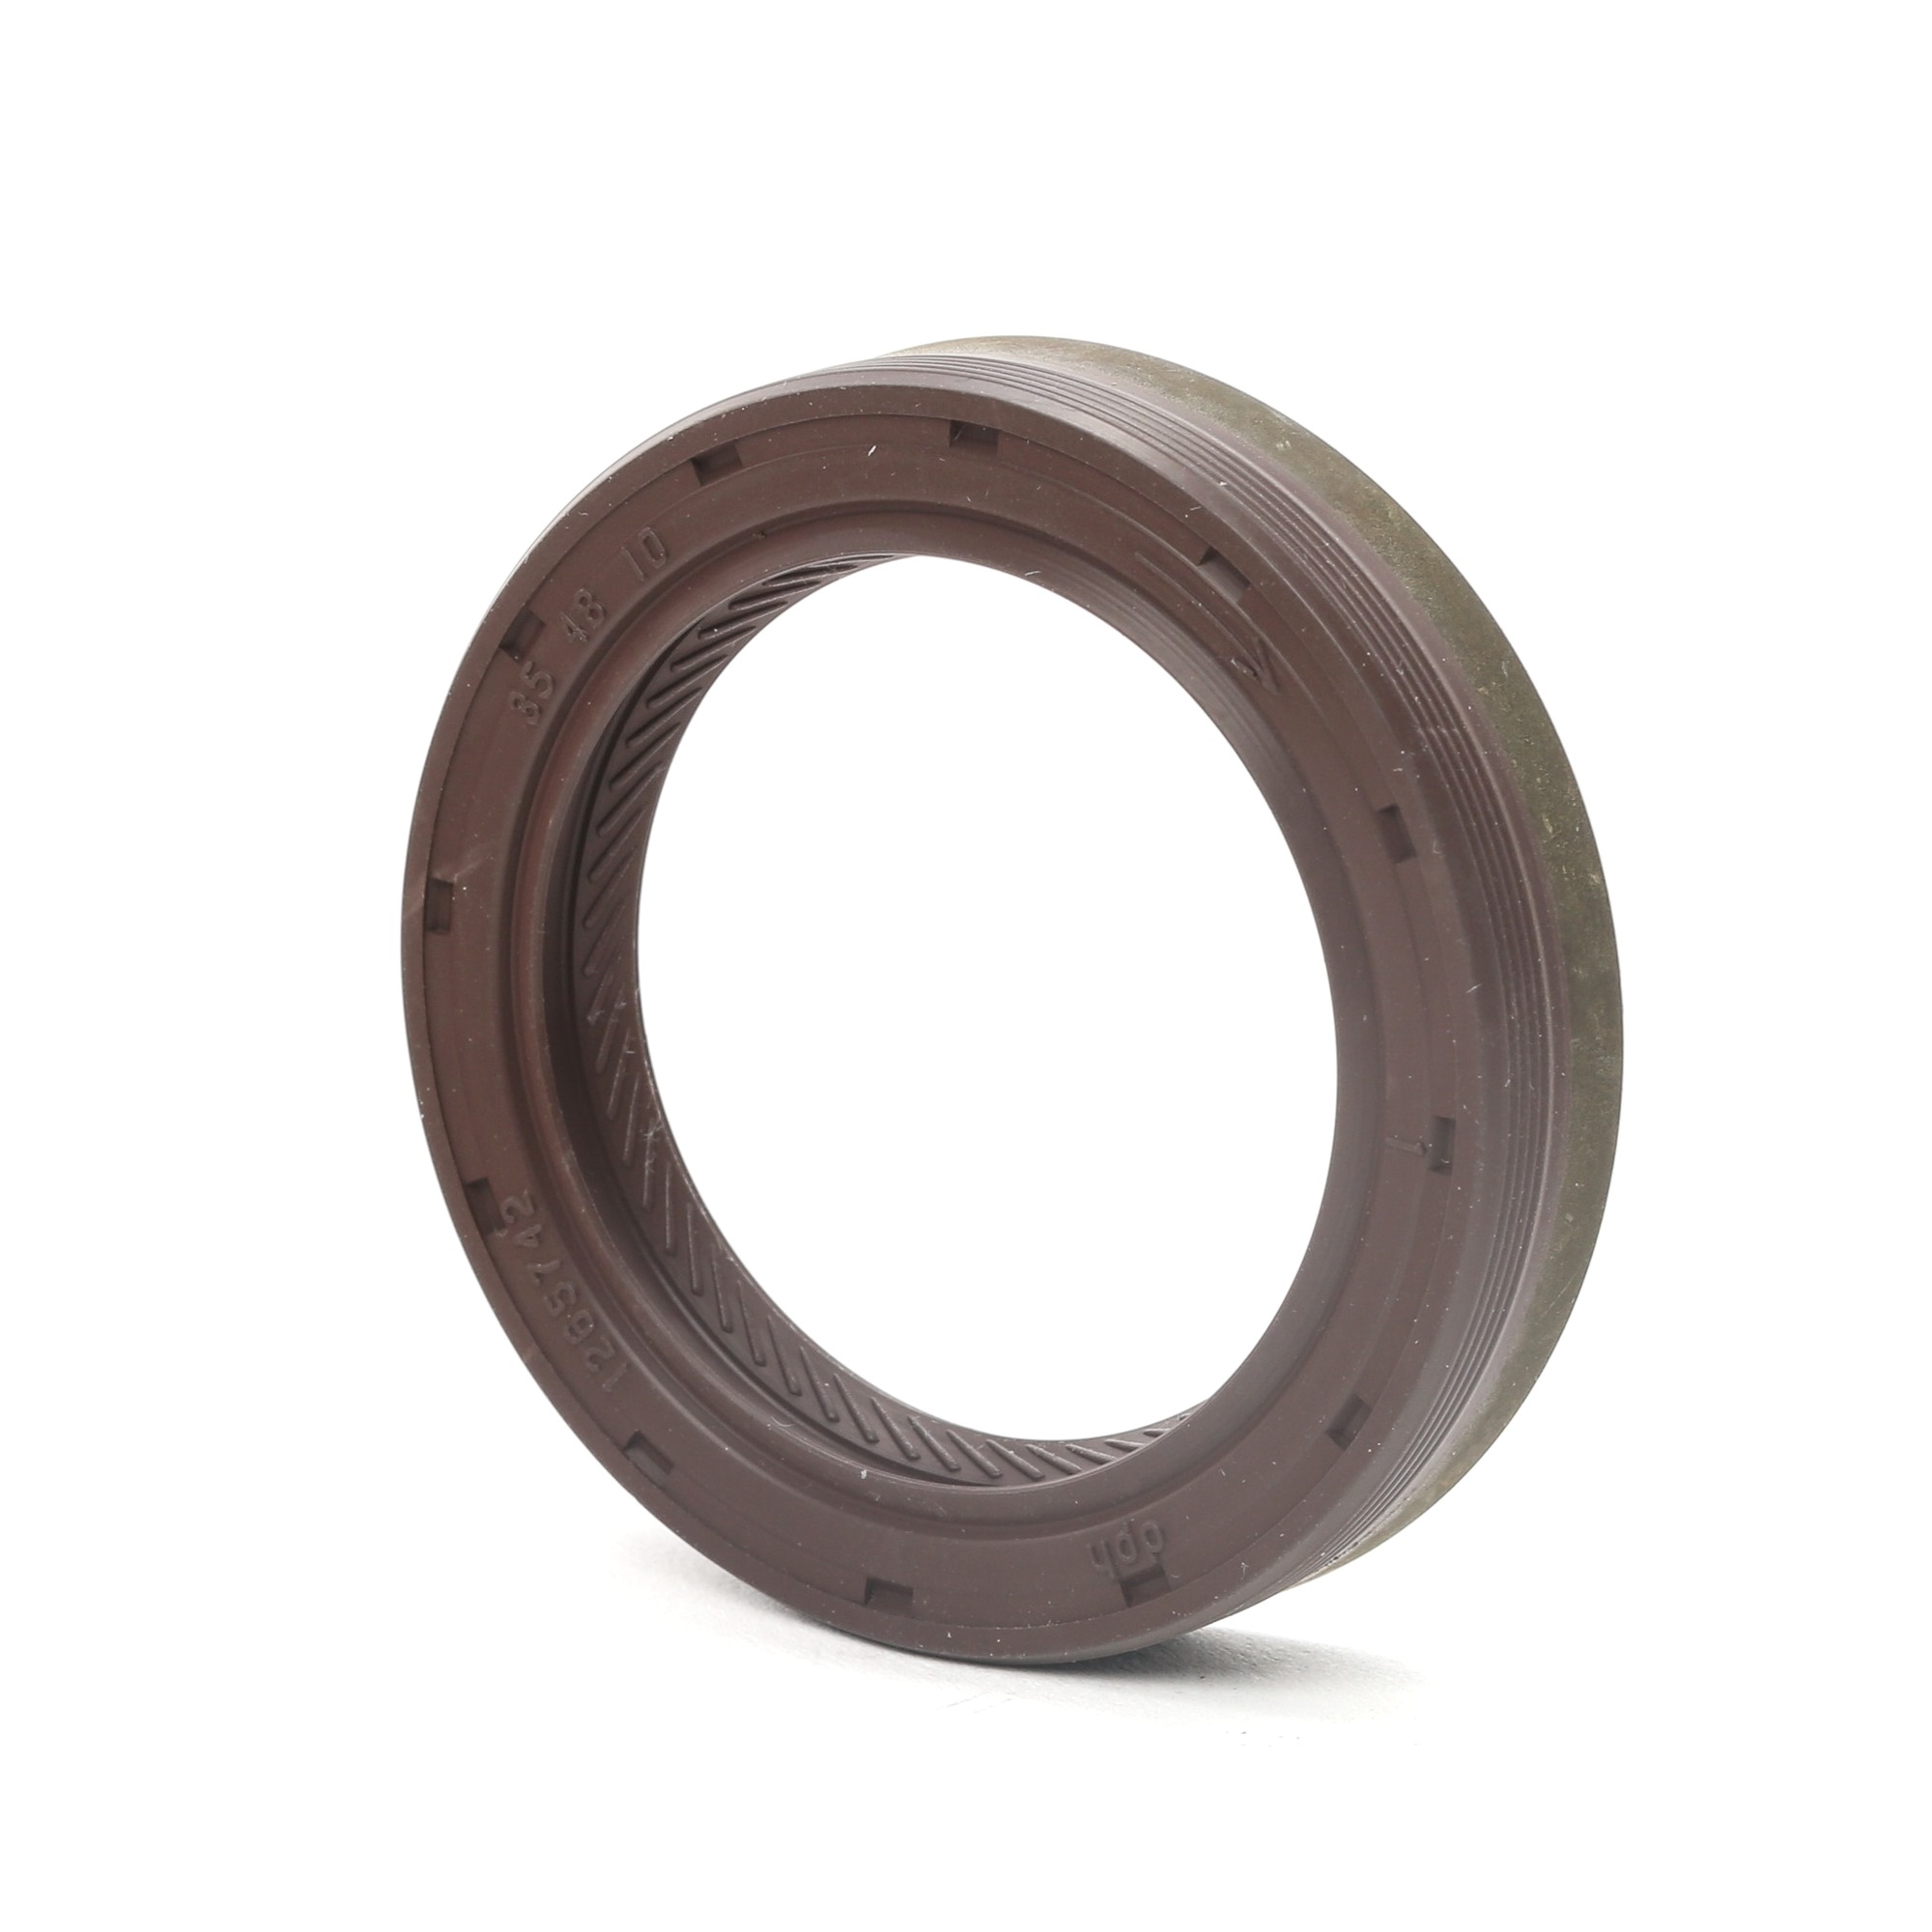 V10-3263 VAICO Crankshaft oil seal JEEP Q+, original equipment manufacturer quality, frontal sided, FPM (fluoride rubber)